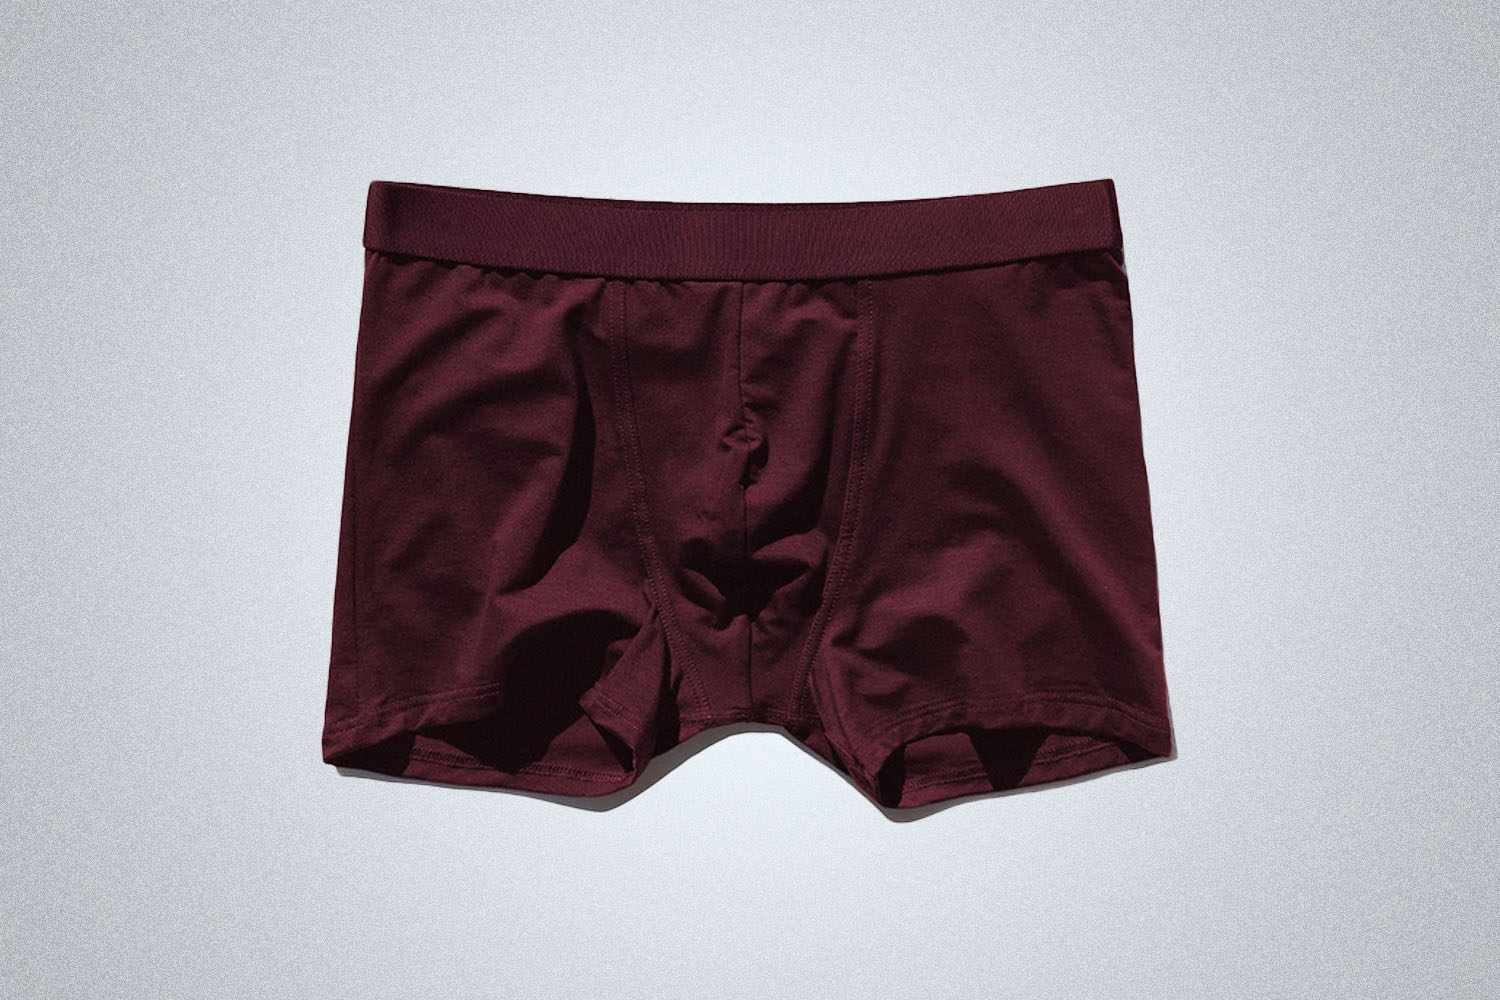 Buy PACt Men's Organic Cotton Stretch Boxer Brief Underwear (2